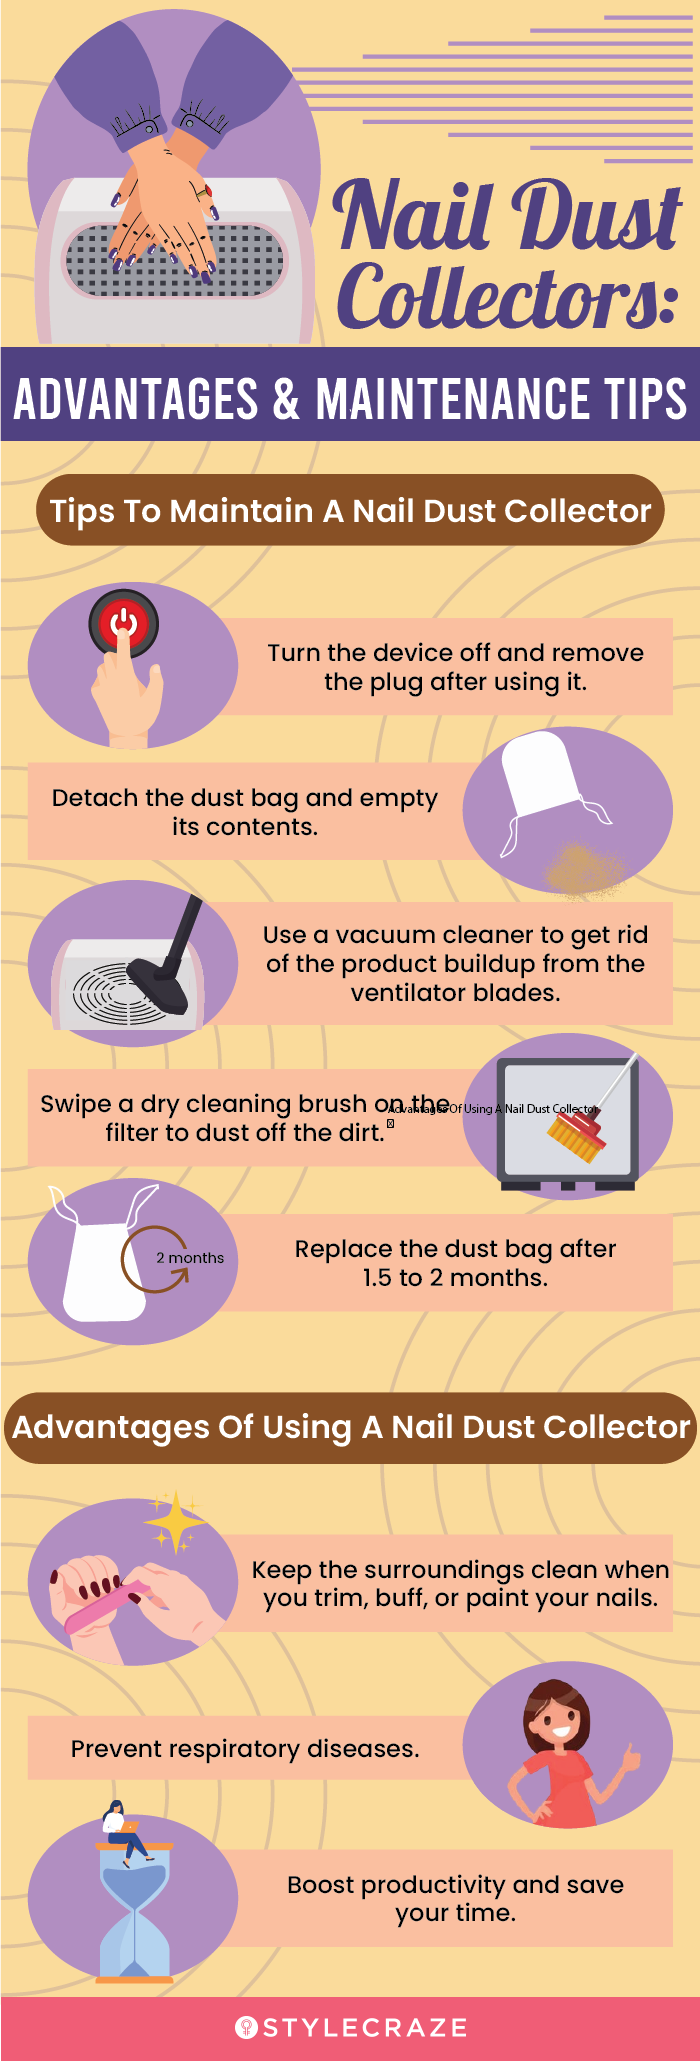 Nail Dust Collectors - Advantages & Maintenance Tips (infographic)